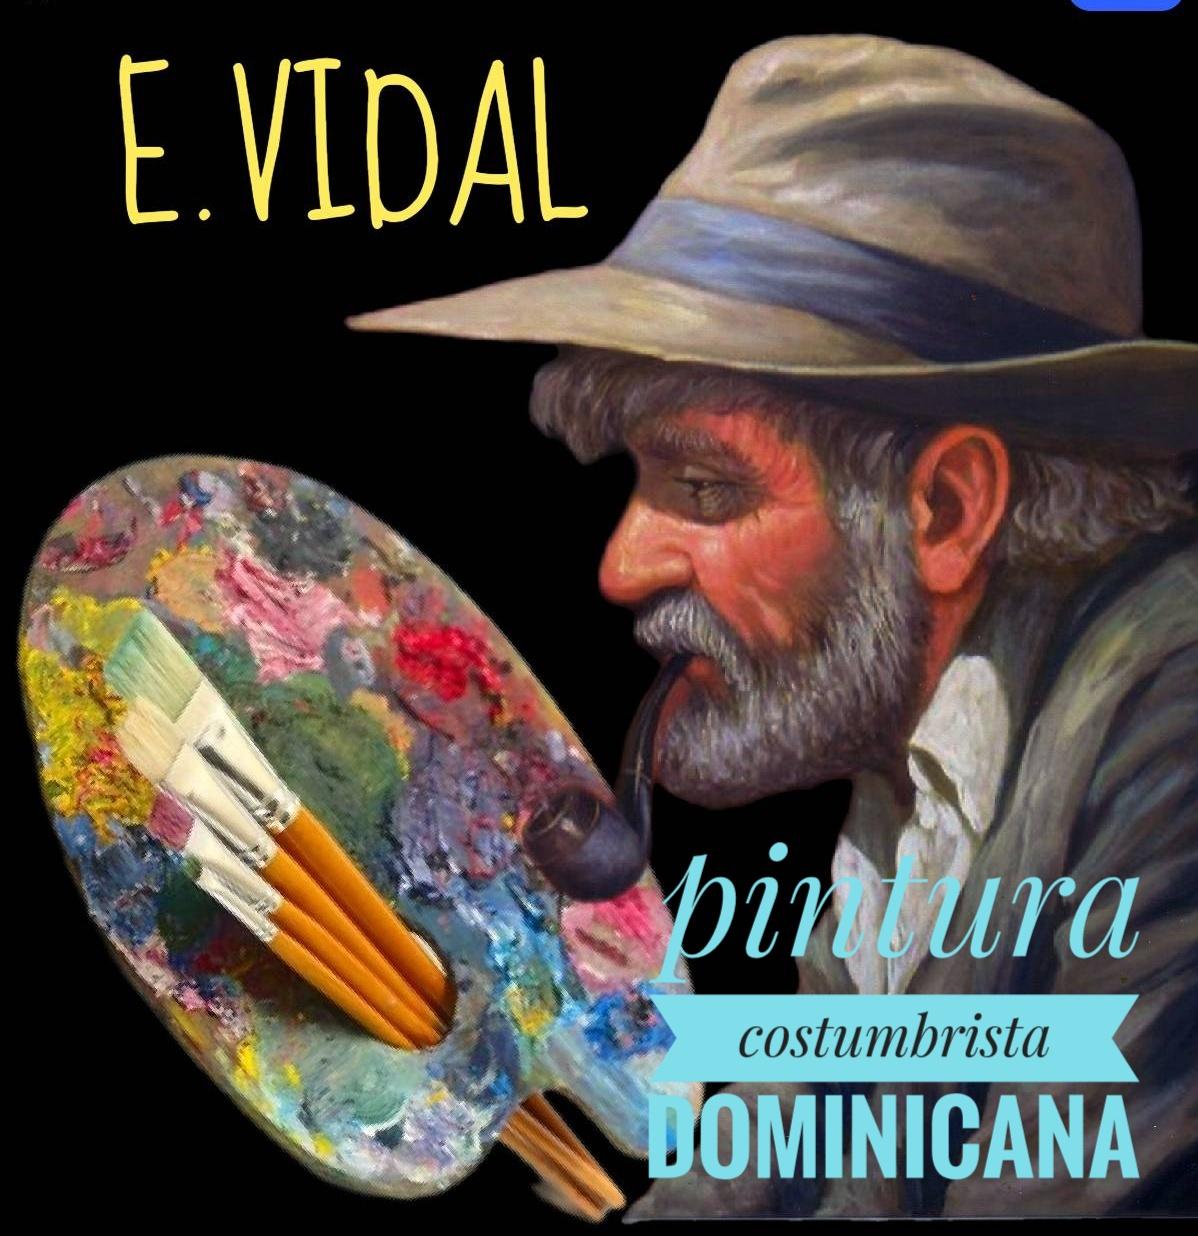 pintor dominicano cuadro costumbrista obra de arte e.vidal Foto 7211792-5.jpg